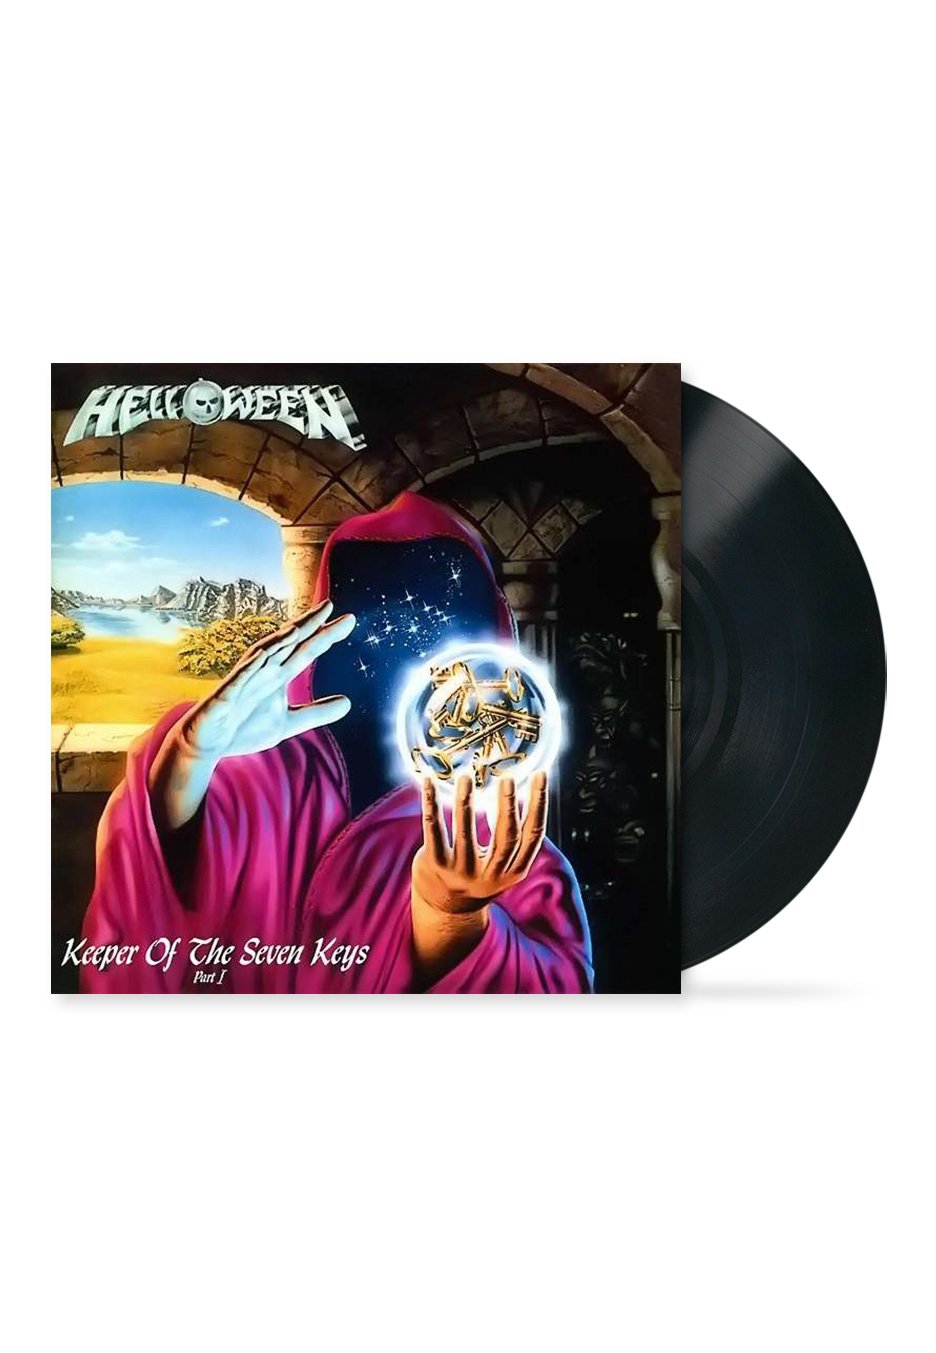 Helloween - Keeper Of The Seven Keys, Pt. 1 - Vinyl